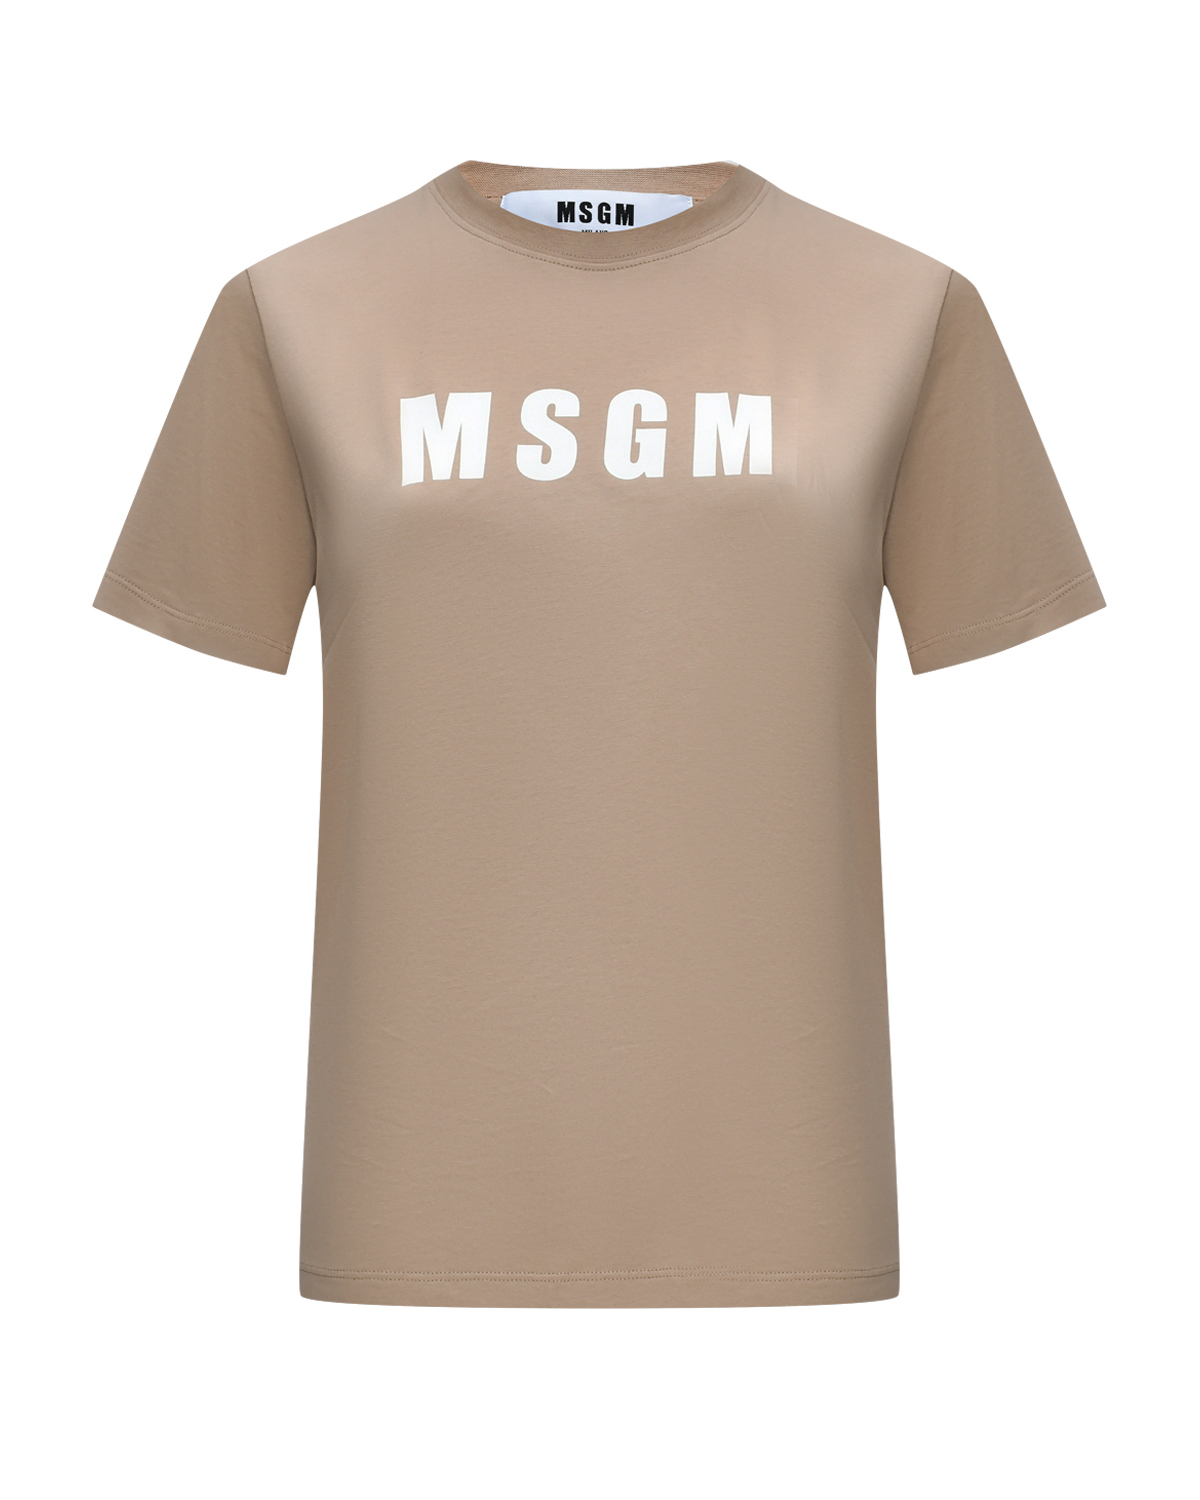 Базовая футболка с лого MSGM футболка мужская базовая бежевая с черной линией на рукавах